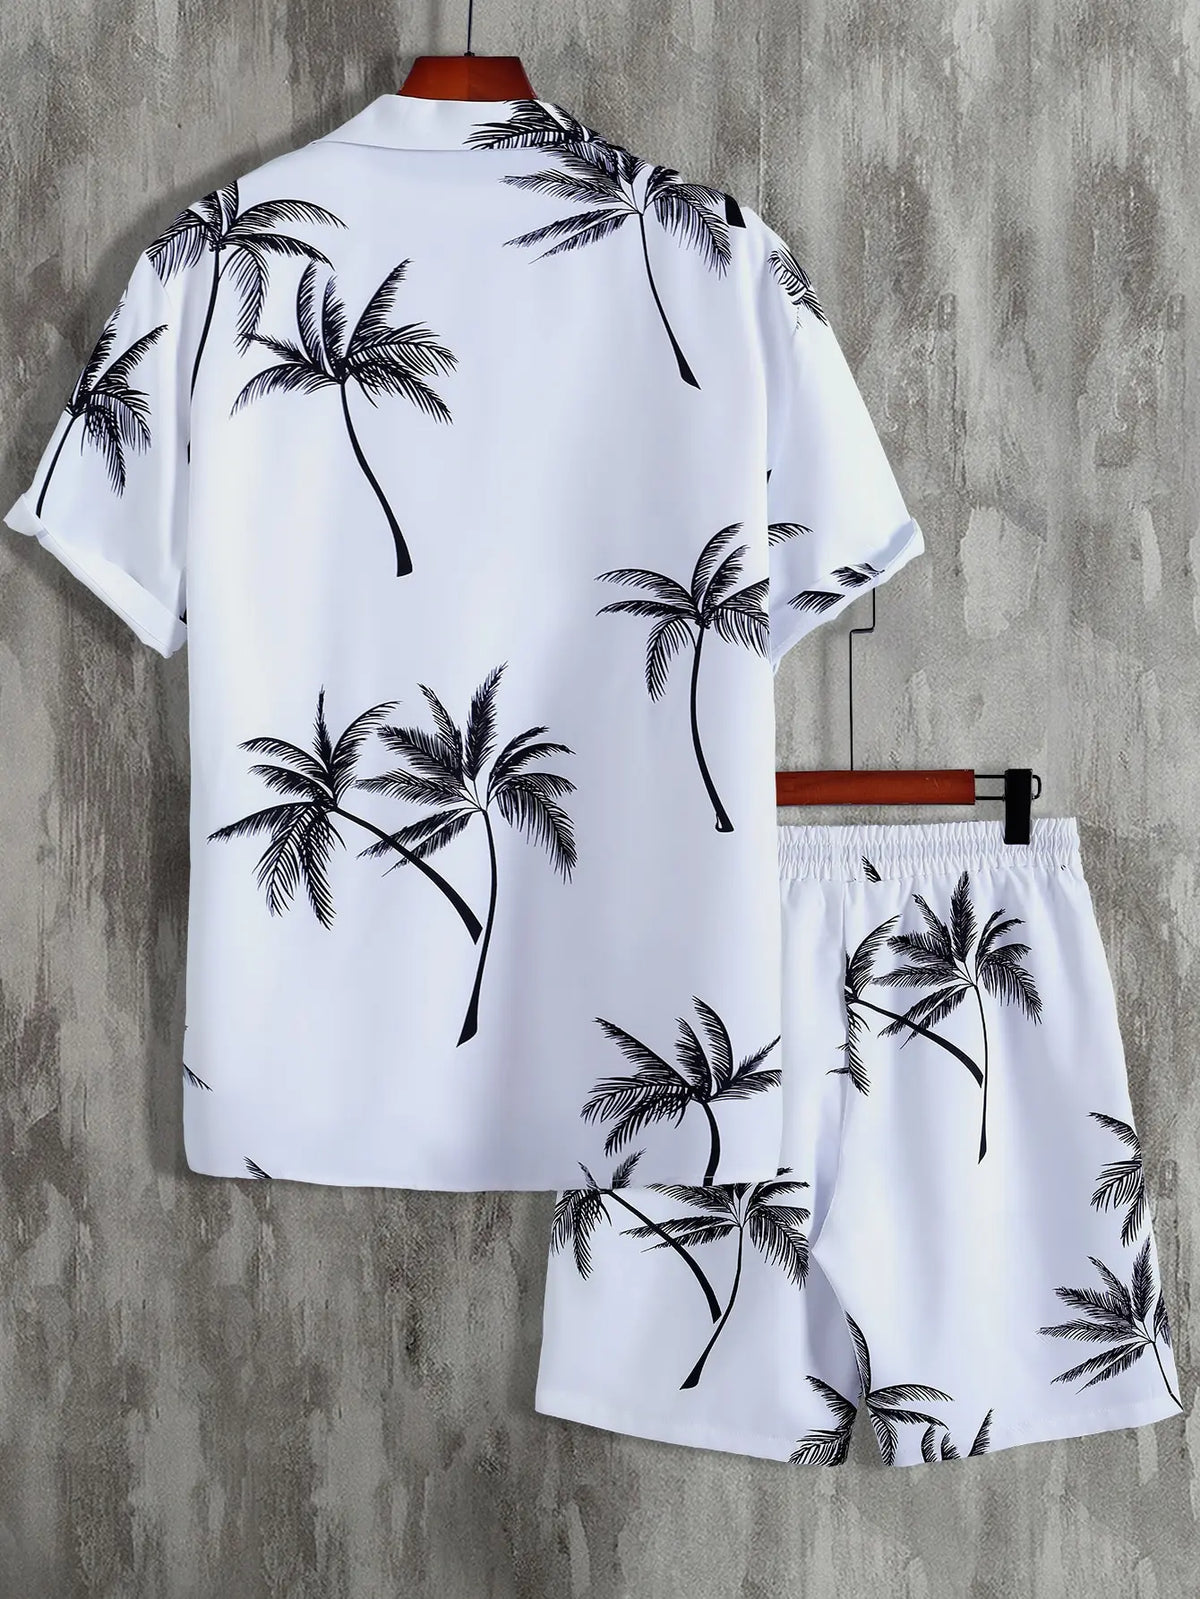 Conjunto Camisa + Short Palm Beach